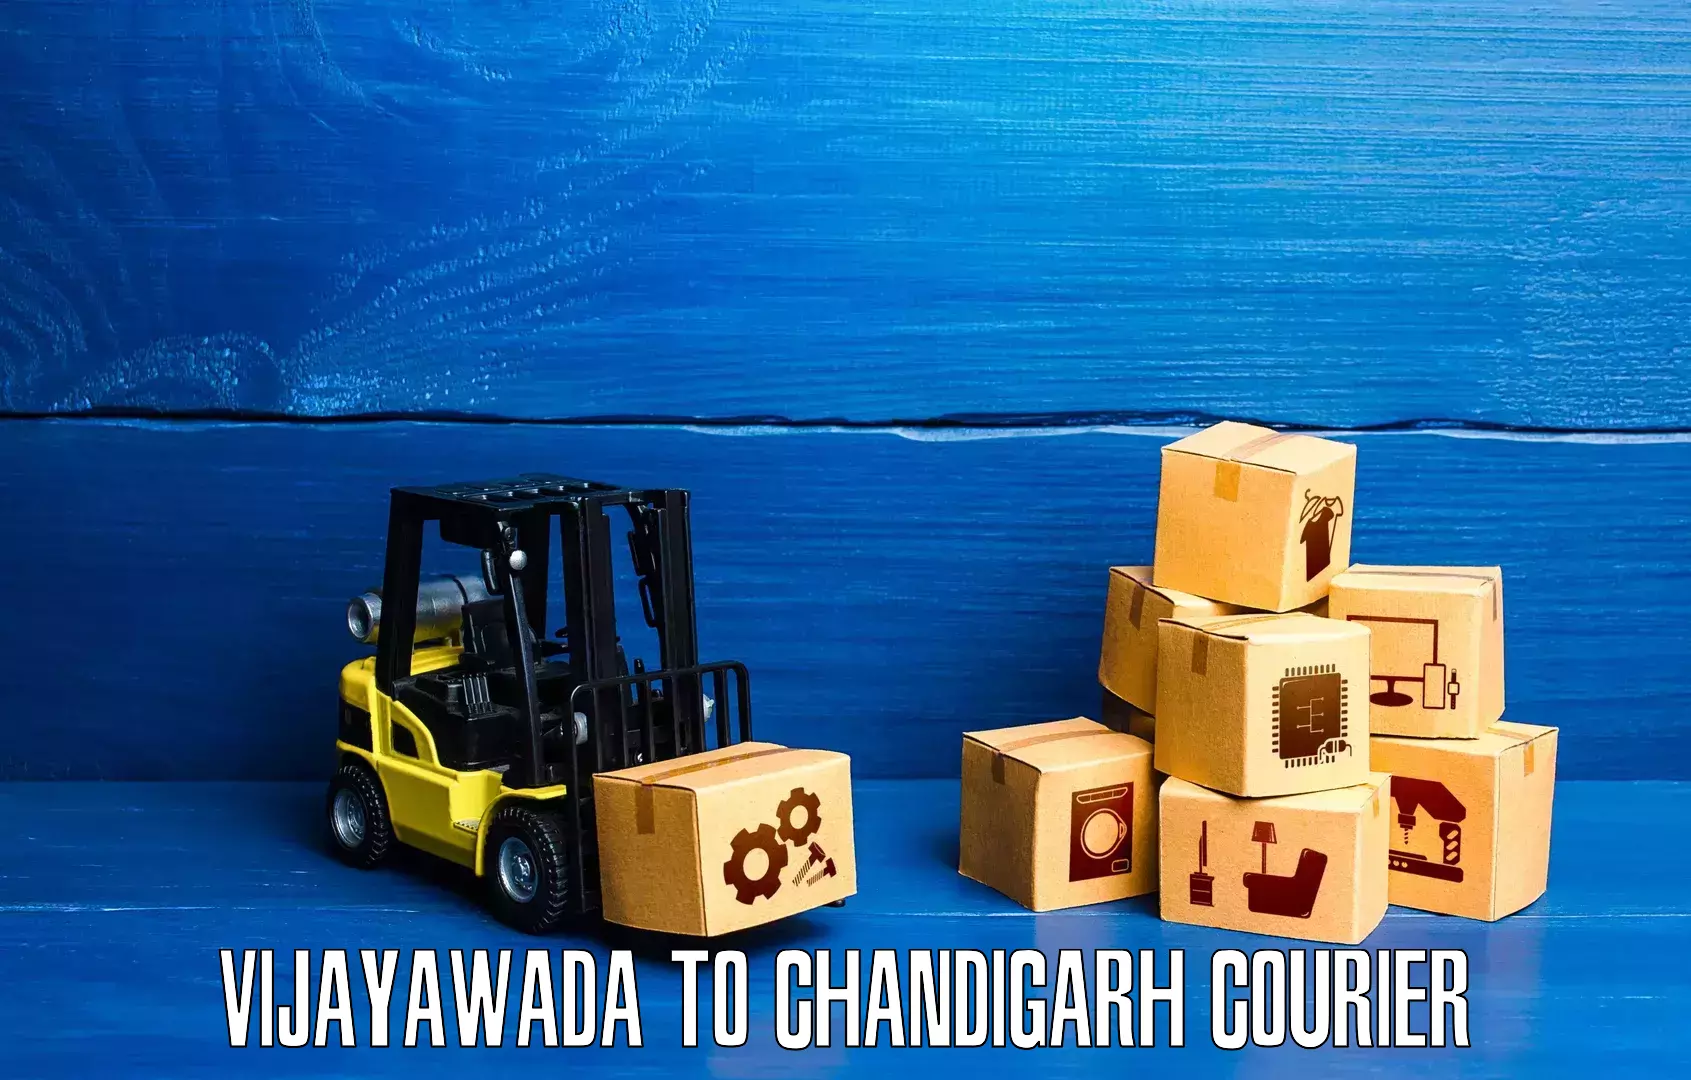 Courier service comparison in Vijayawada to Chandigarh